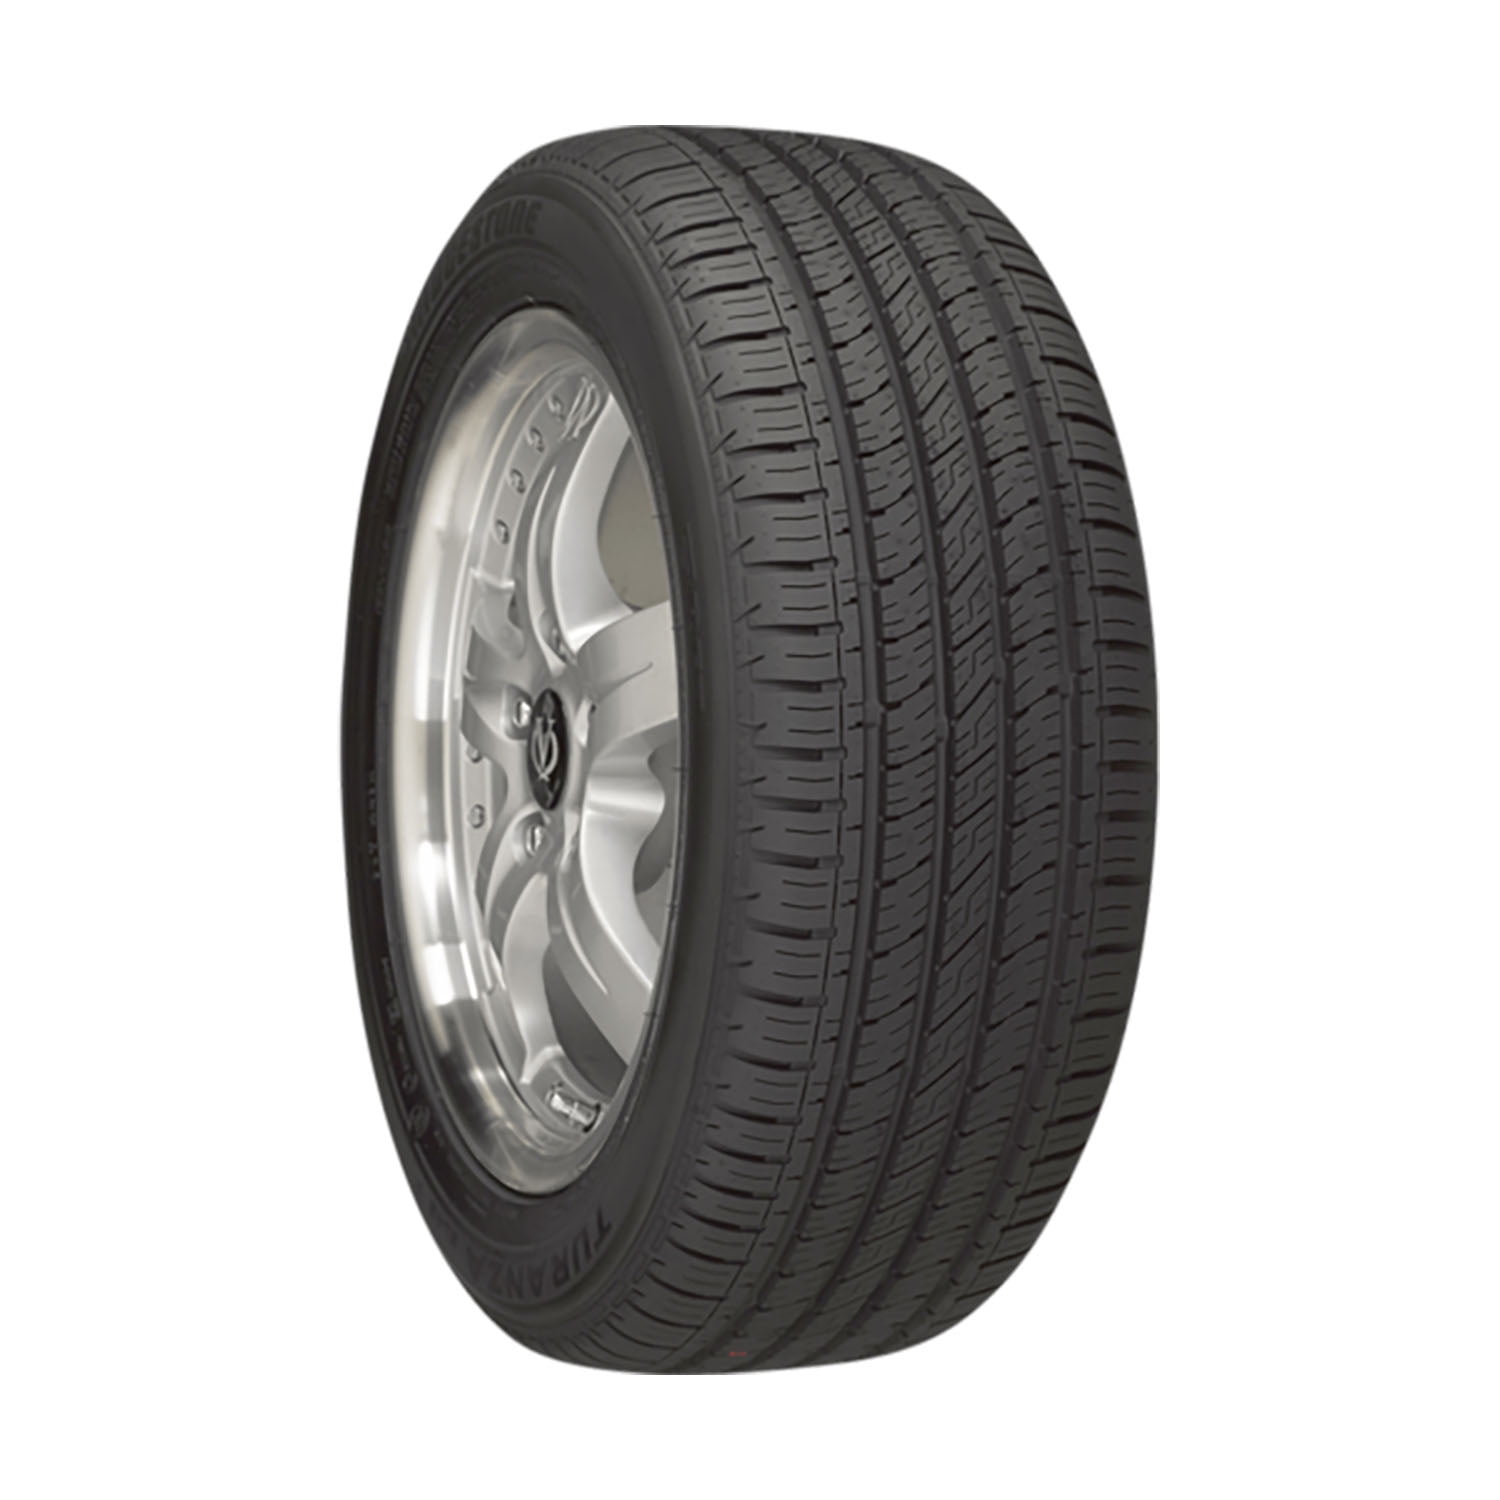 Bridgestone YPB, CIK Prime, Front tire